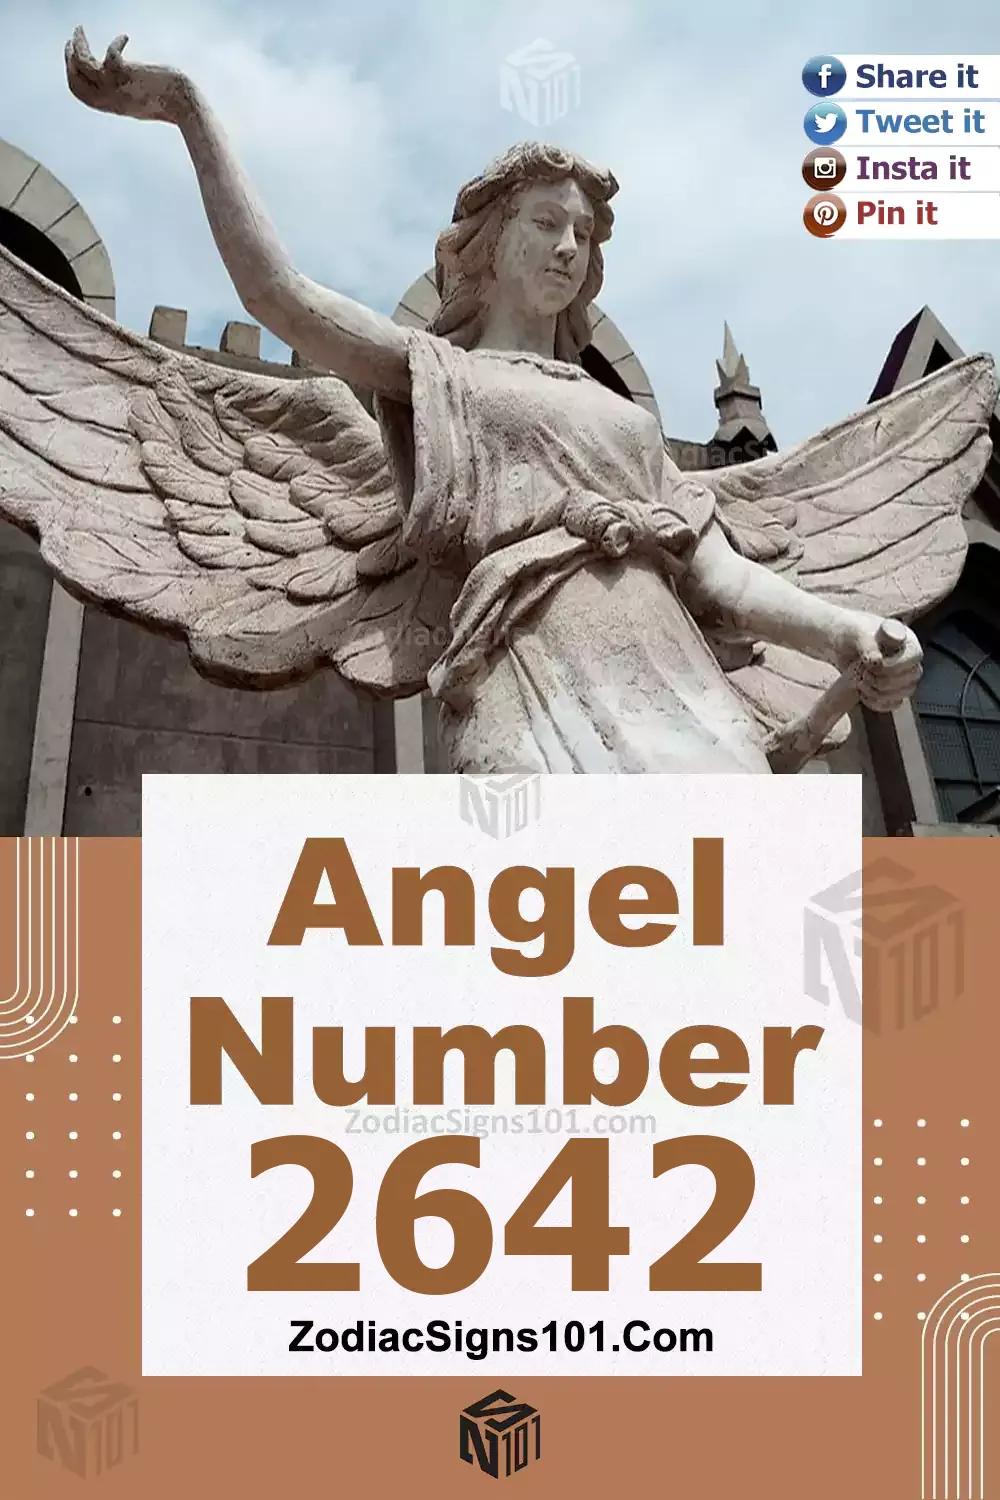 2642-Angel-Number-Meaning.jpg